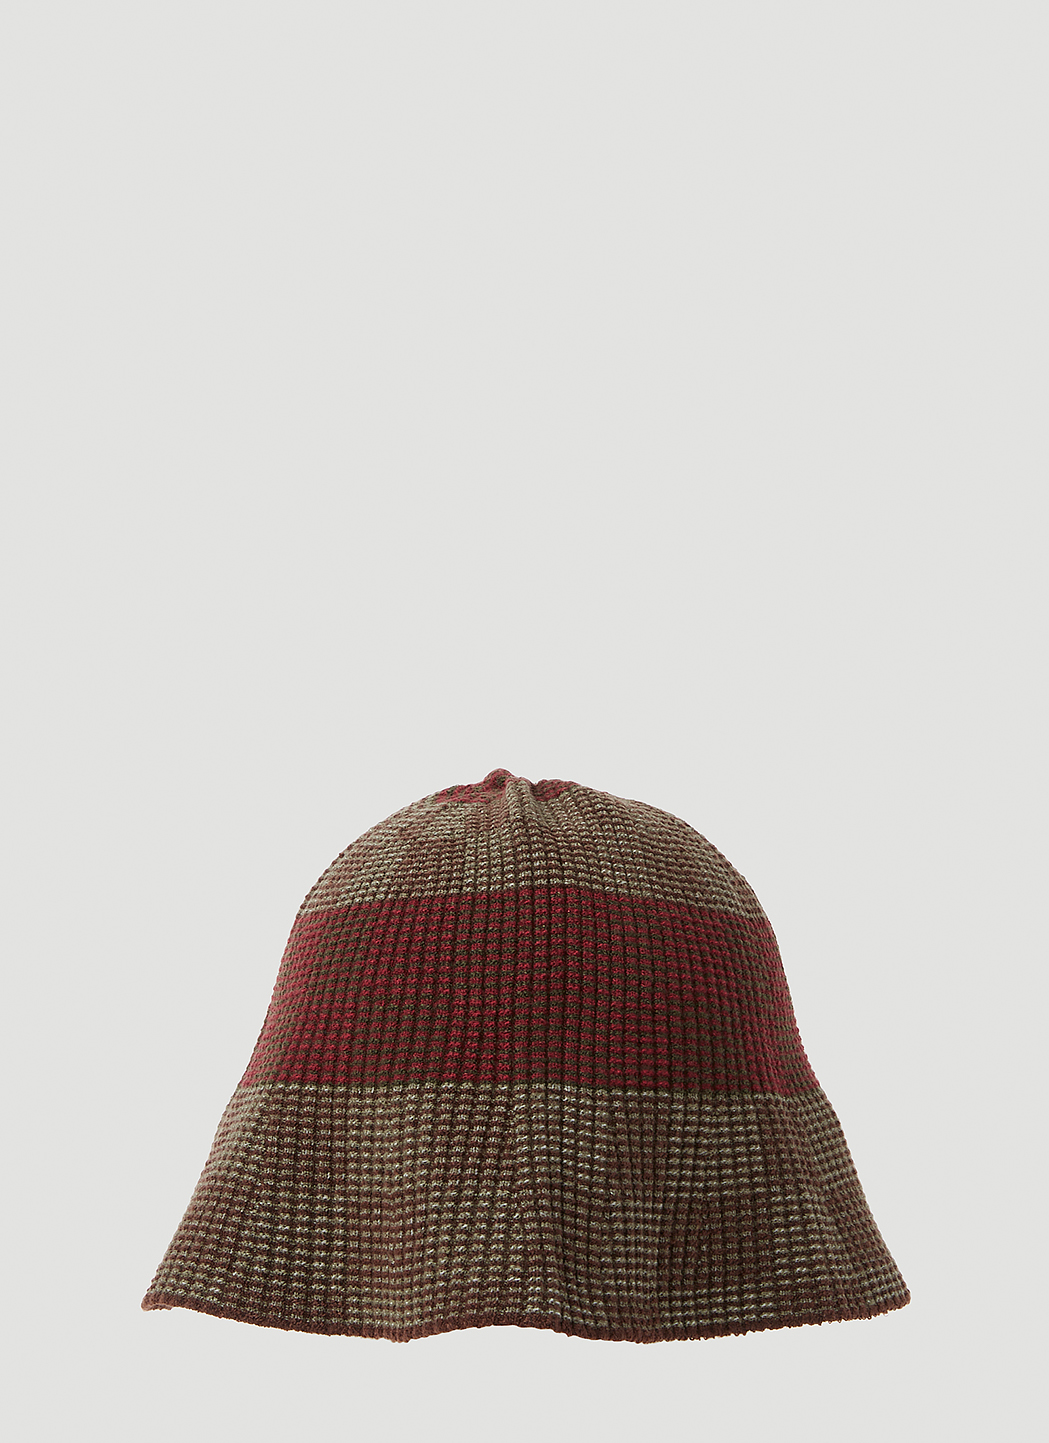 Lenticular Bucket Hat